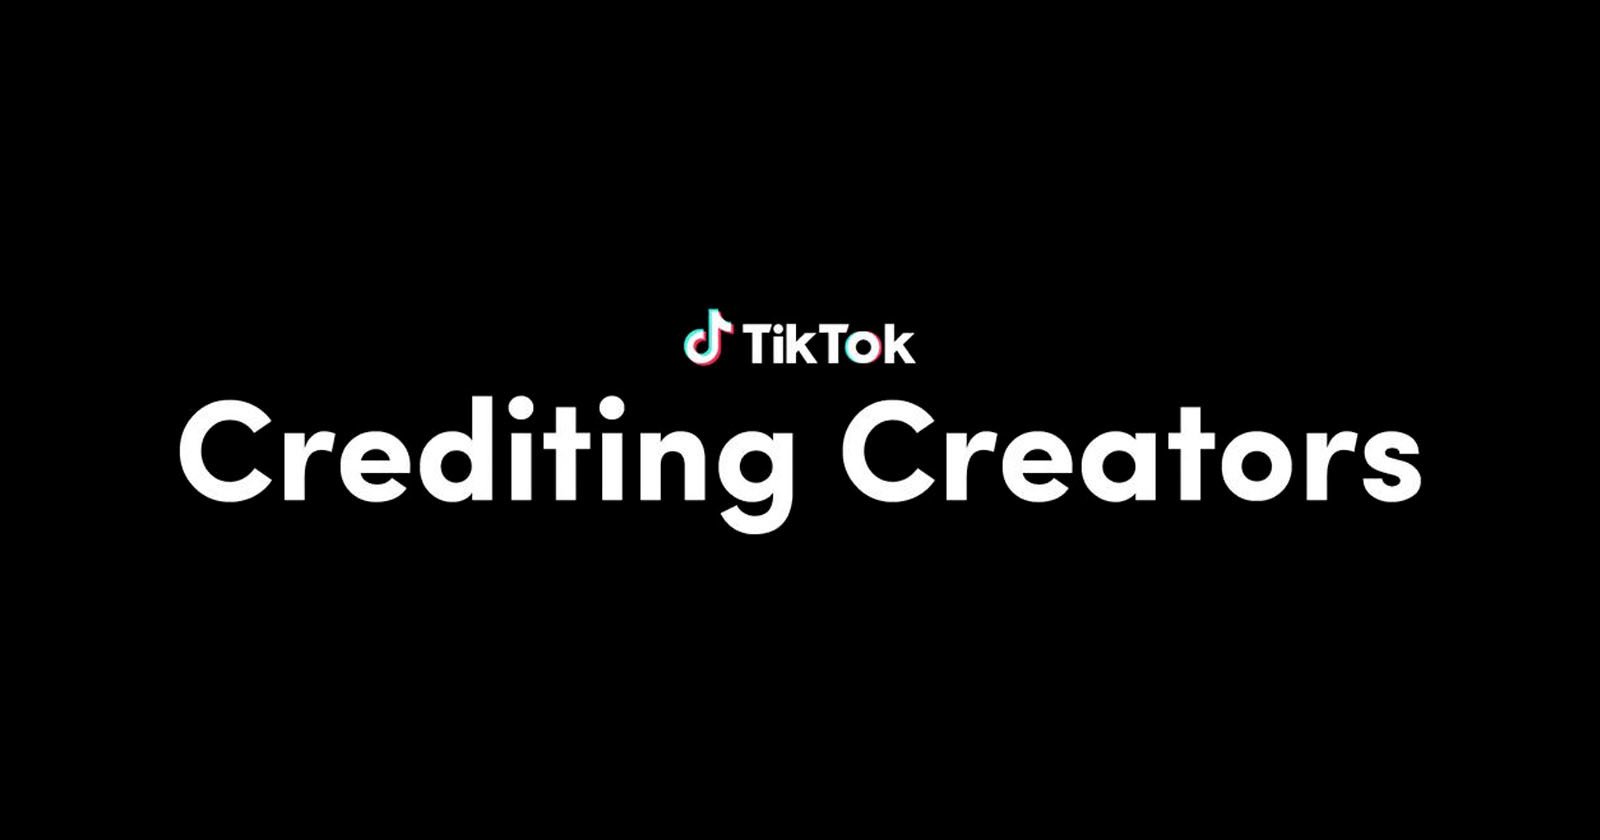  tiktok encouraging its users credit source videos 